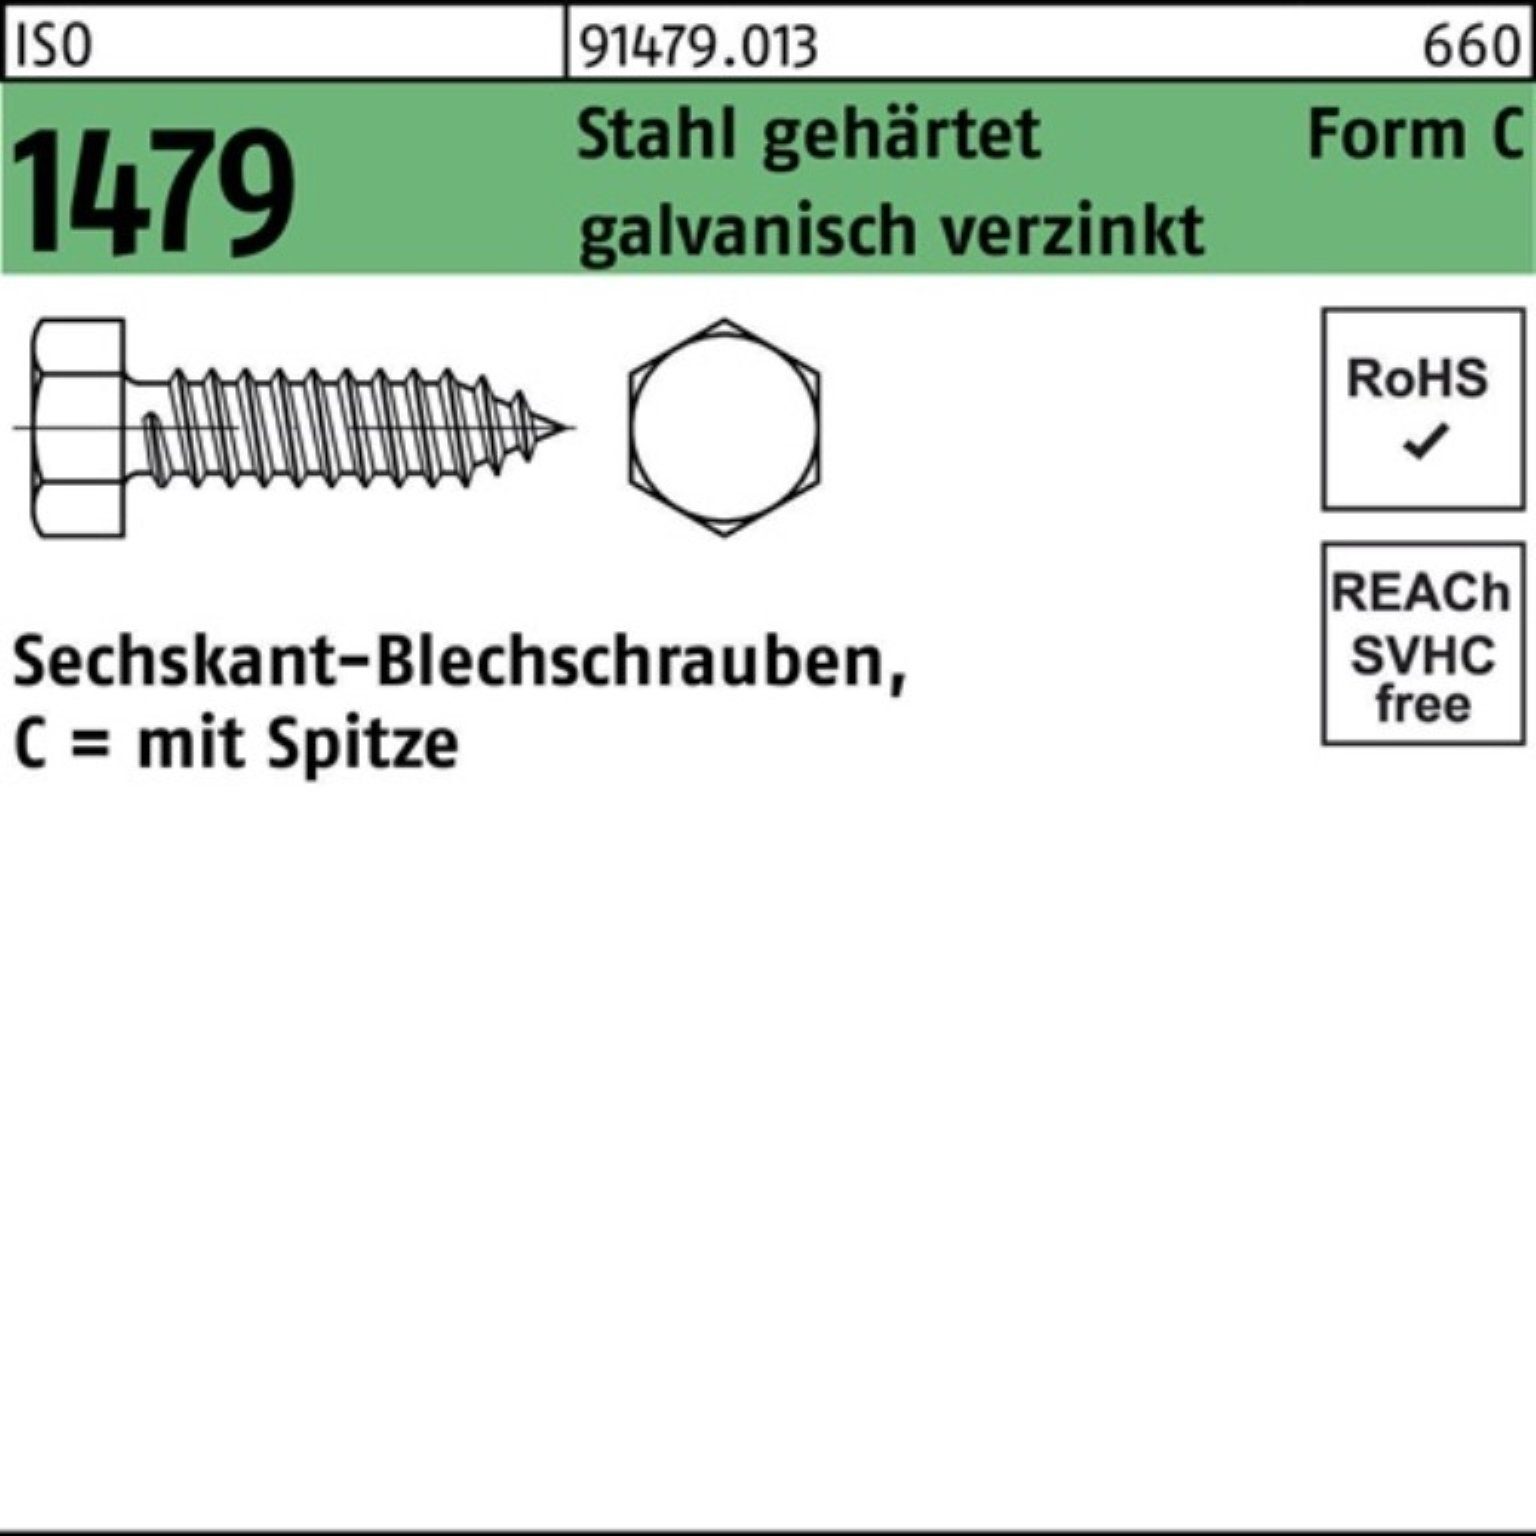 Pack ISO C Blechschraube Blechschraube Stahl Reyher gehärtet Spitze/6-kt 250er 1479 5,5x38